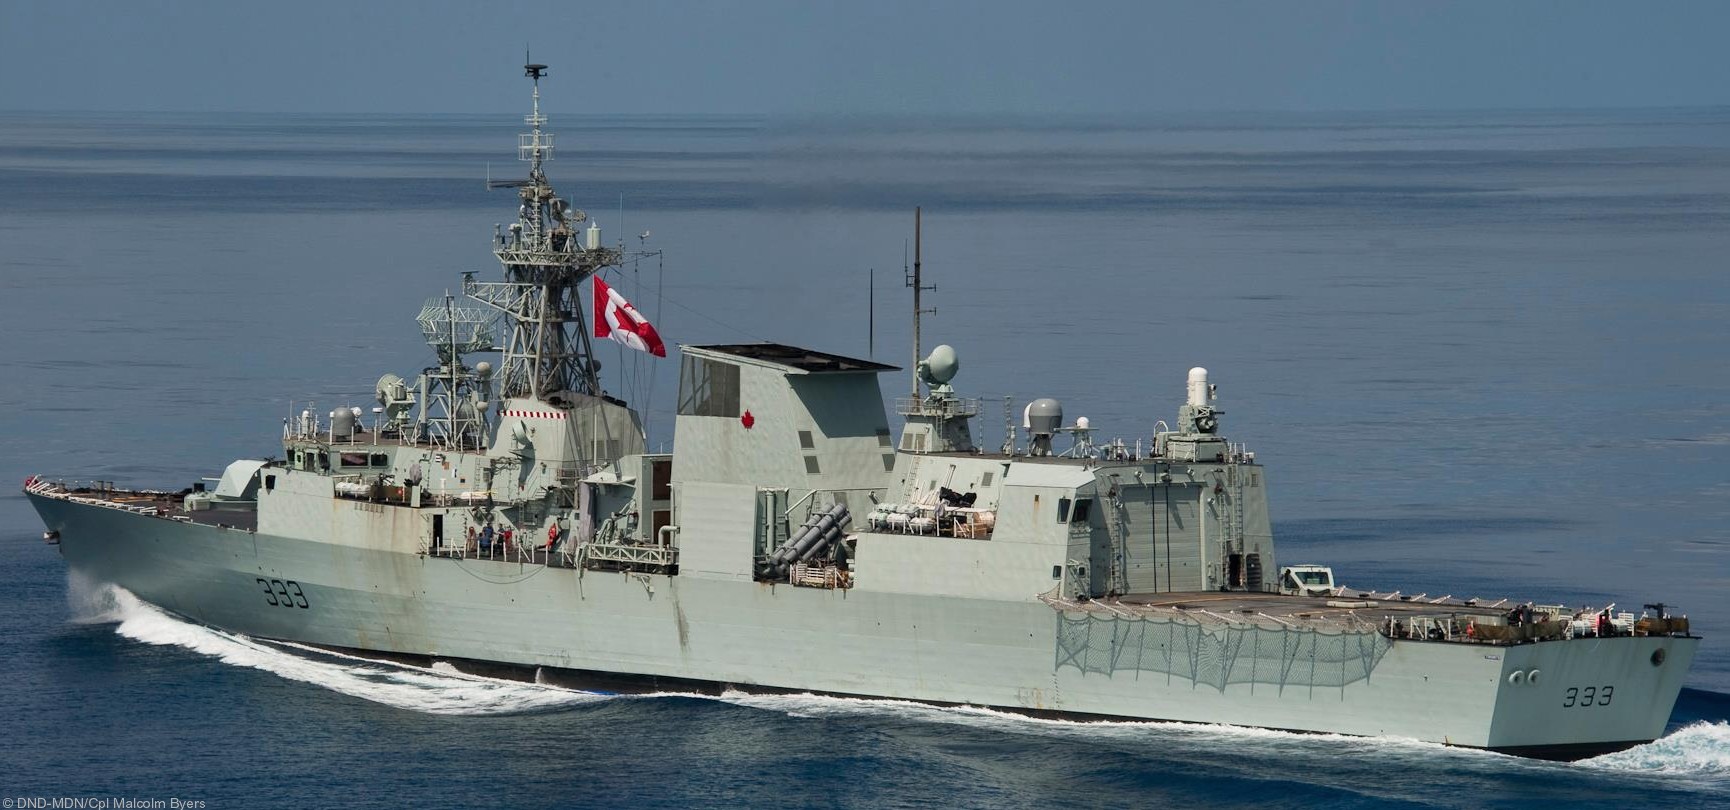 ffh-333 hmcs toronto halifax class helicopter patrol frigate ncsm royal canadian navy 19